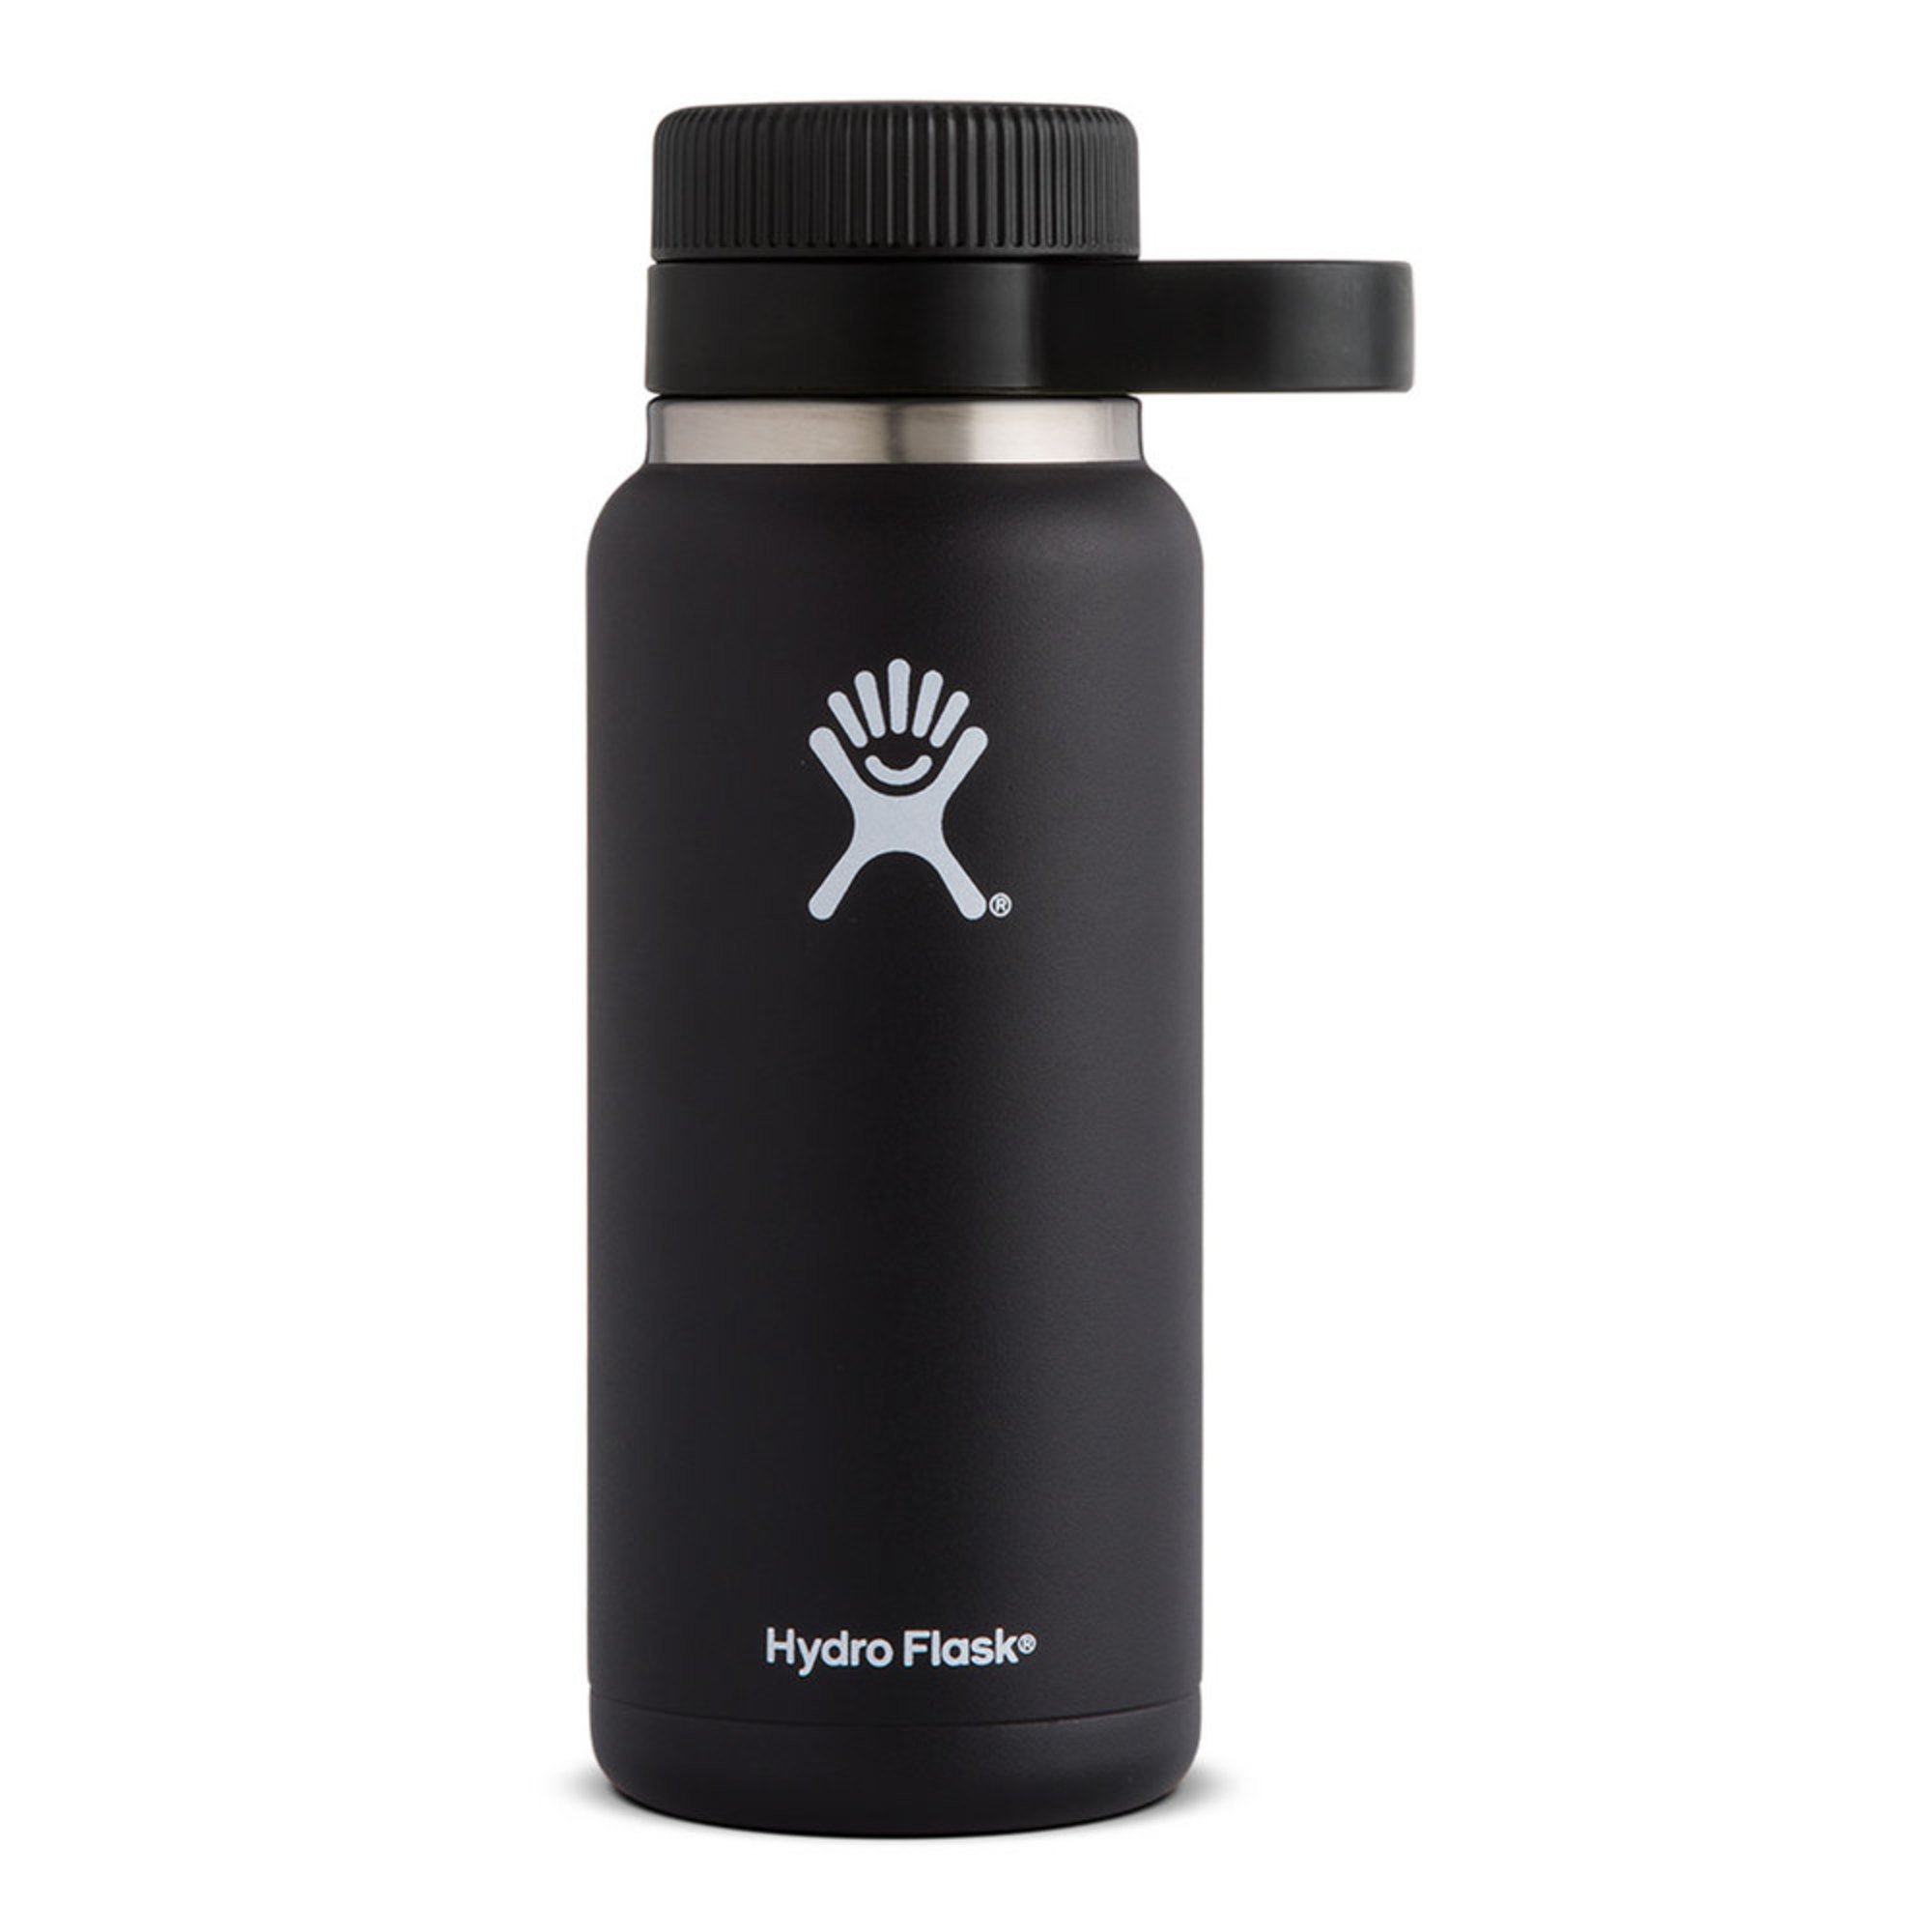 32 oz hydro flask black